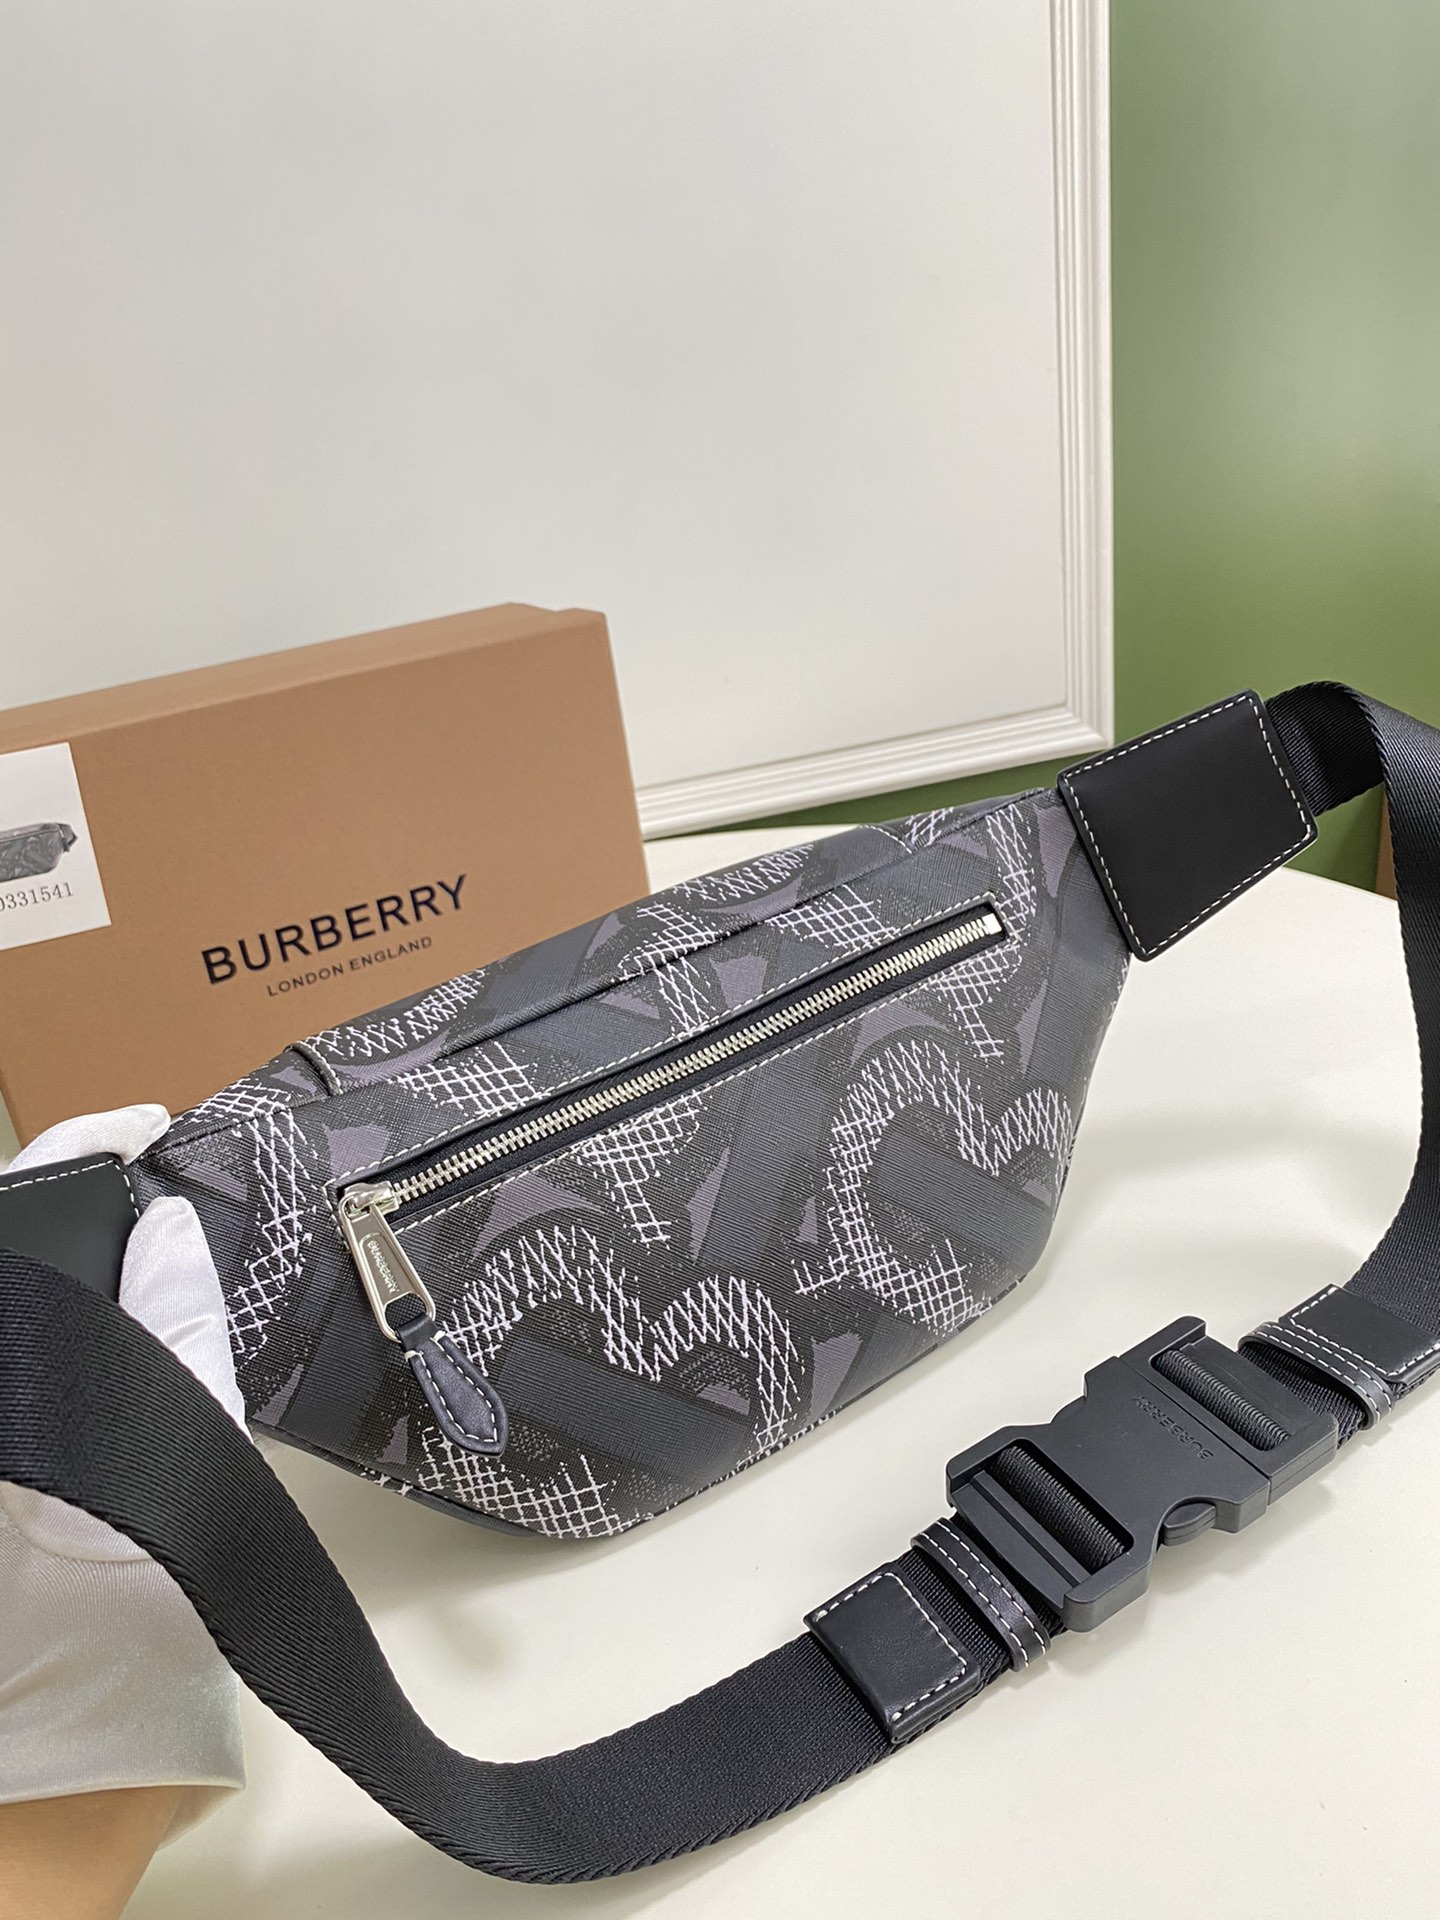 Burberry巴宝莉专属标识印花环保帆布胸包